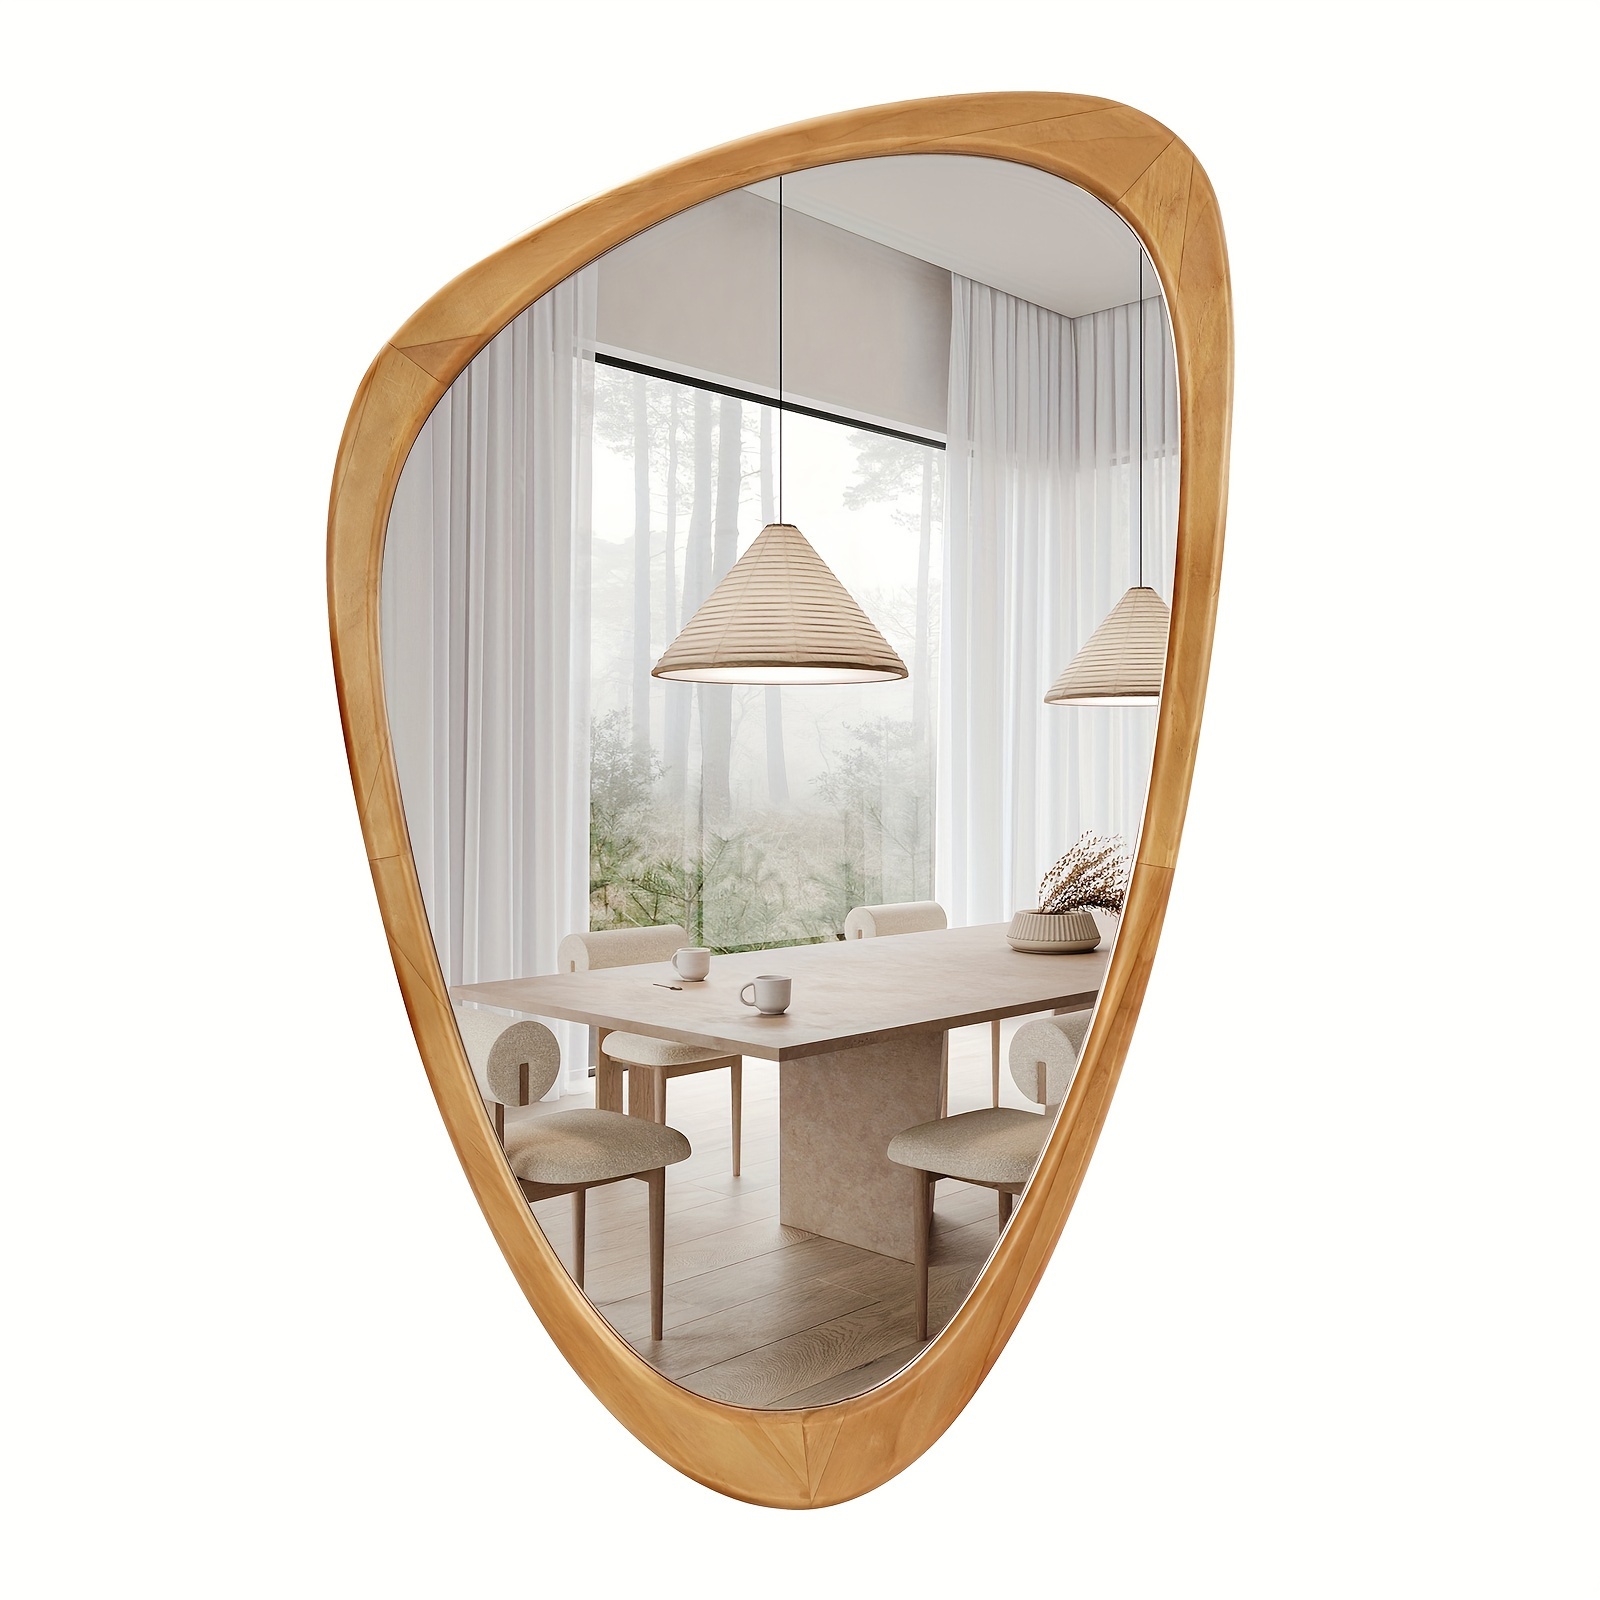 

Asymmetrical Mirror, Irregular Wall Mirror, Wall Mirrors Decorative For Bedroom Living Room Entryway Hall, Wood Mirror For Decor 30.5" X 19.5